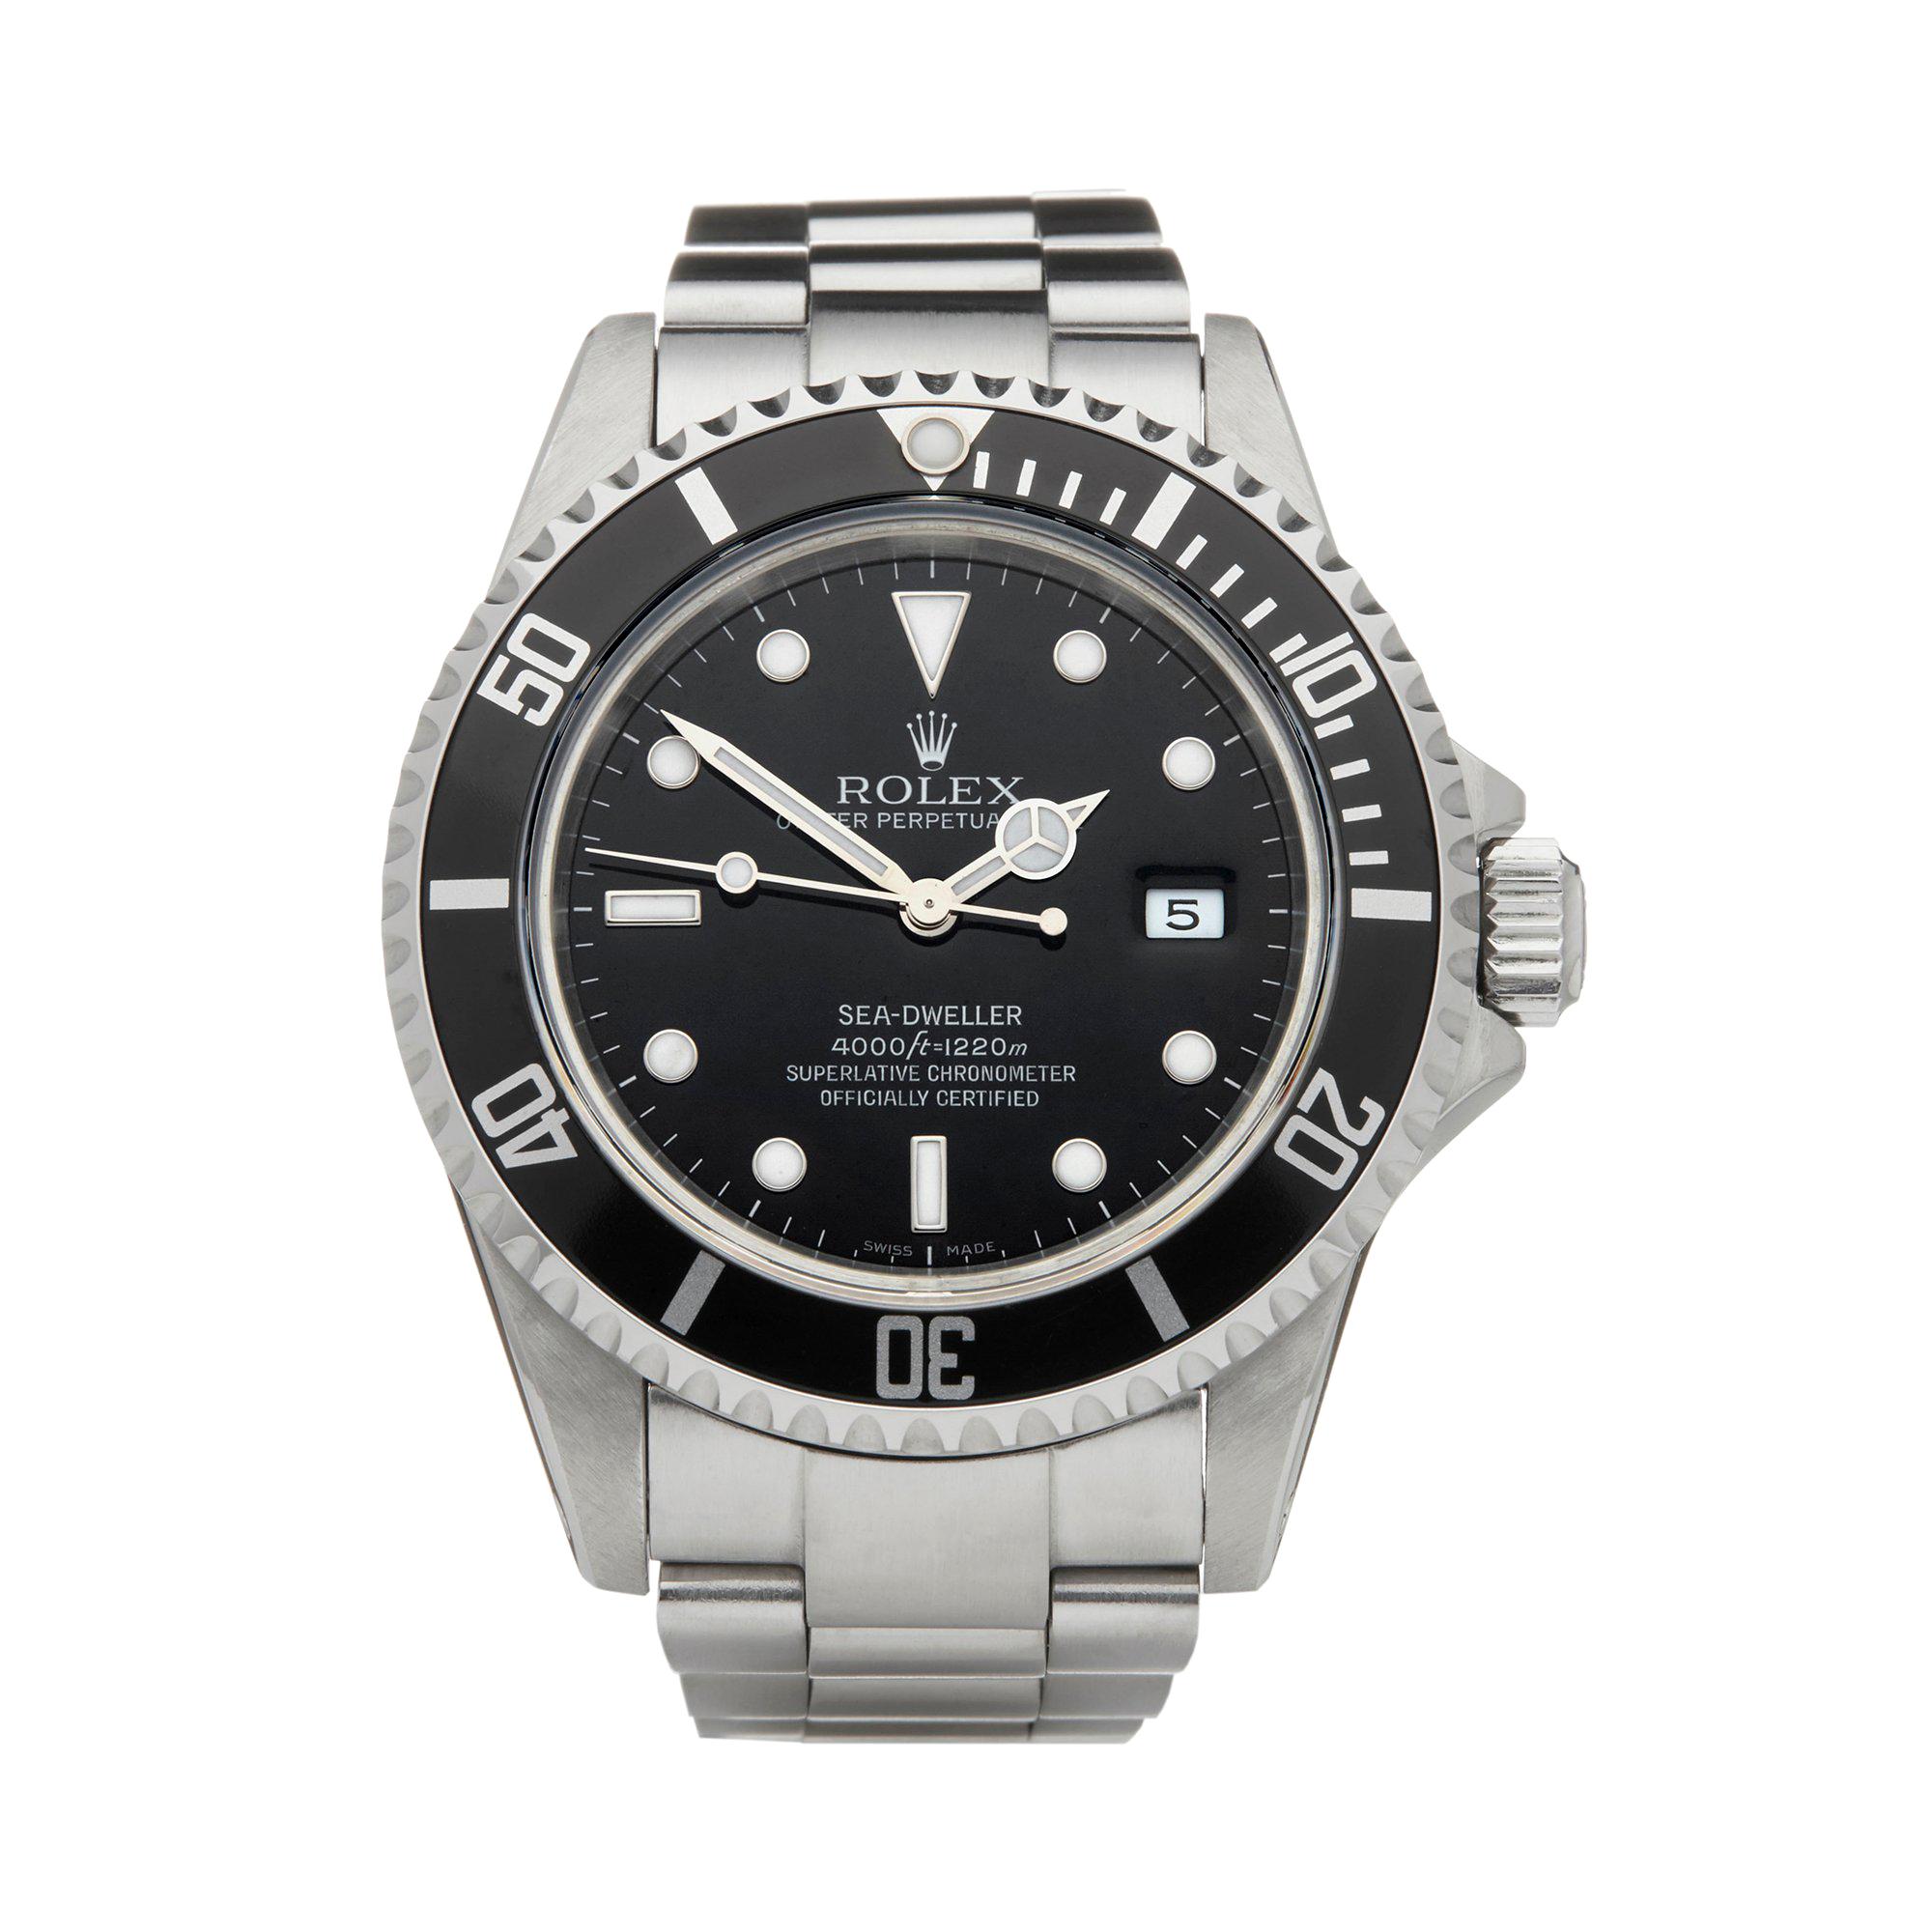 Rolex Sea-Dweller Stainless Steel 16660 Wristwatch